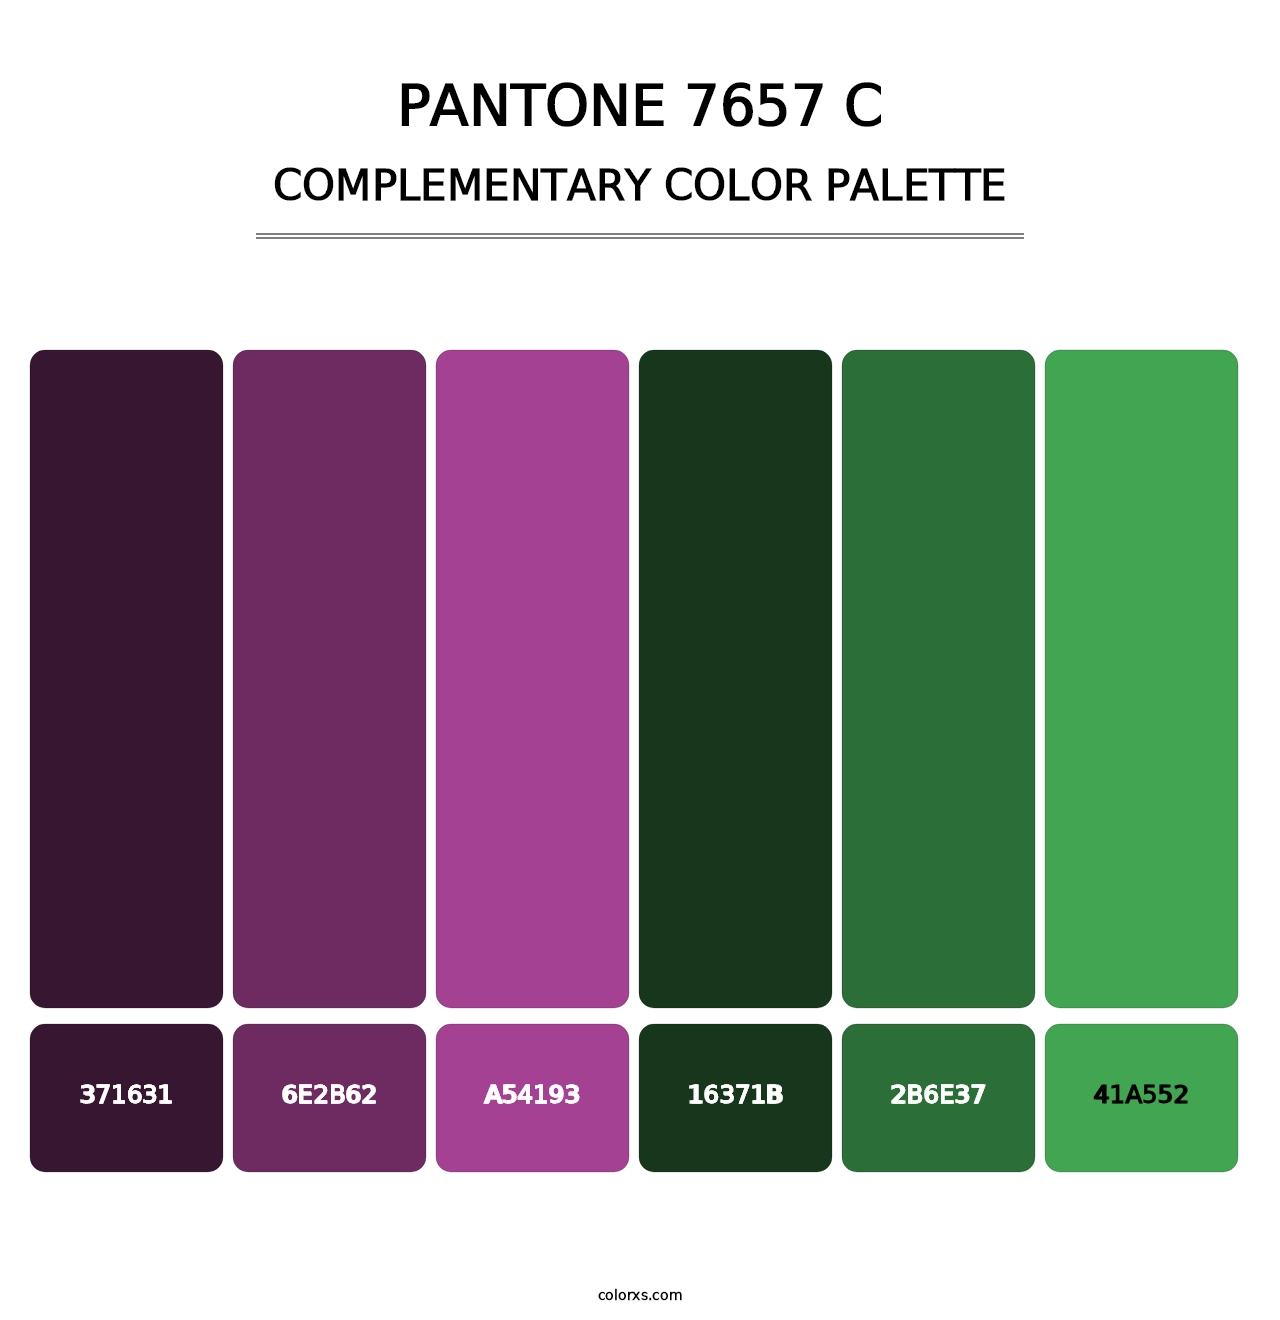 PANTONE 7657 C - Complementary Color Palette